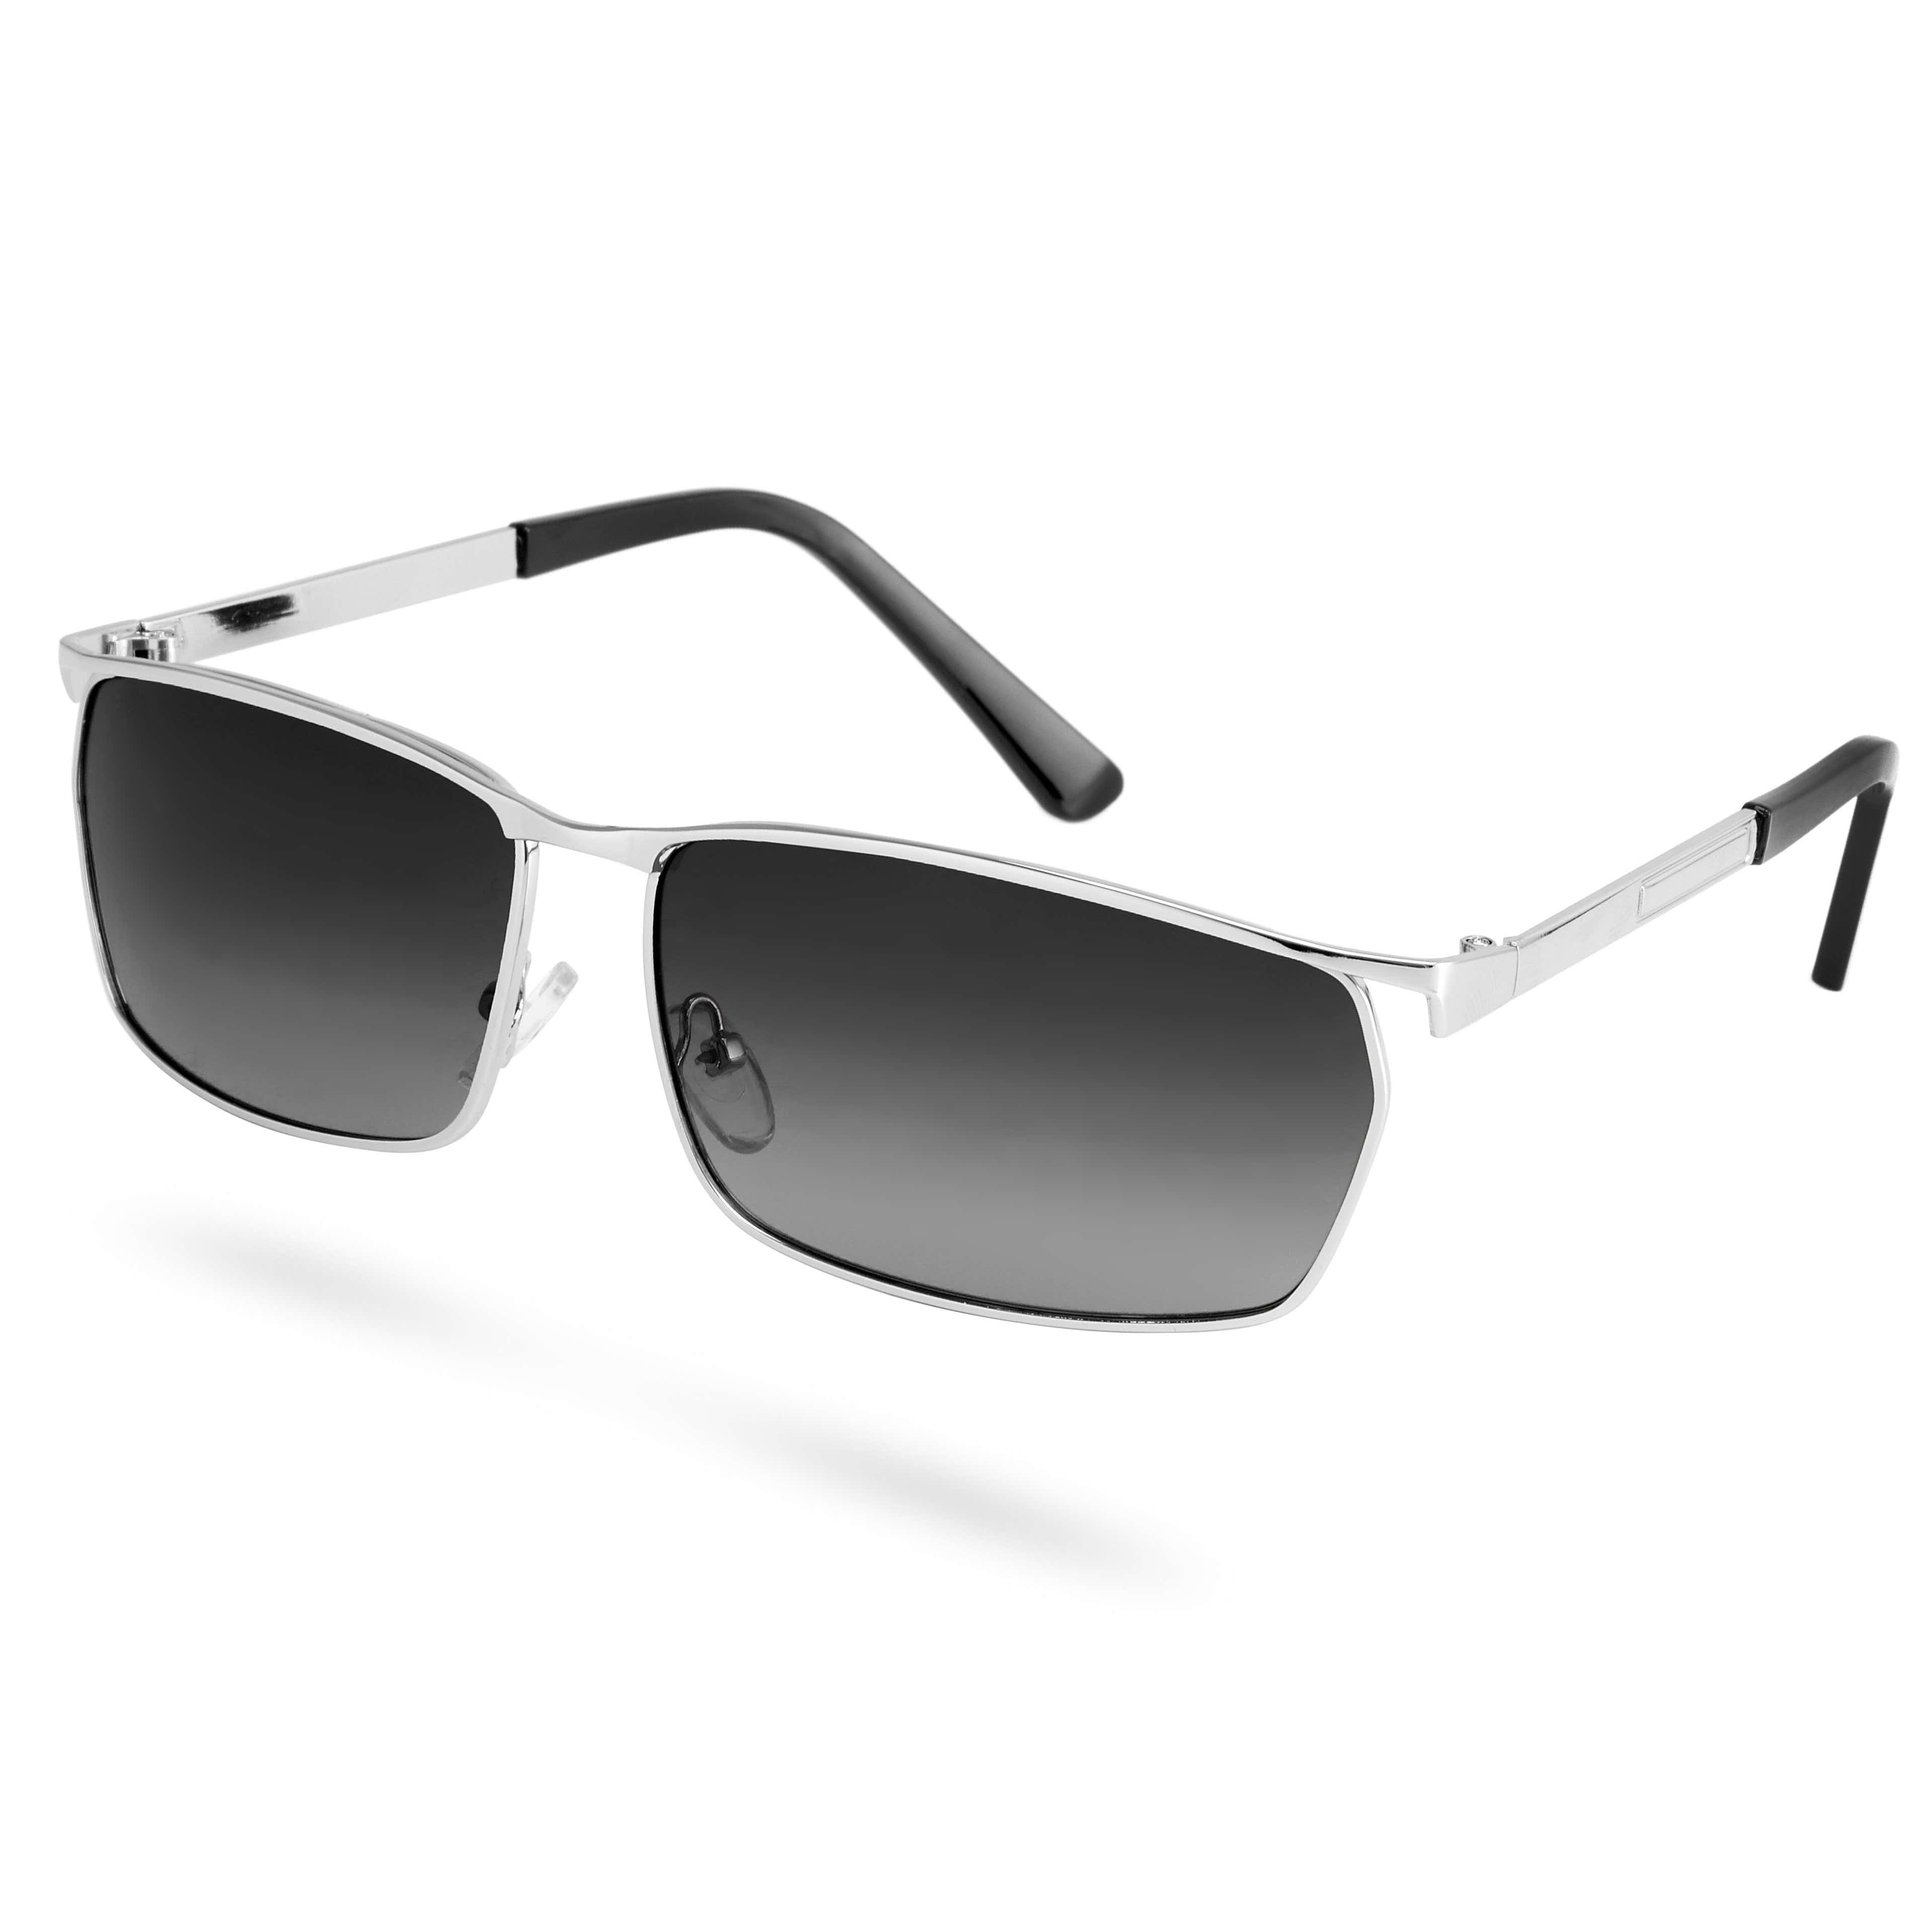 Silver-Tone Smoke Polarized Sunglasses